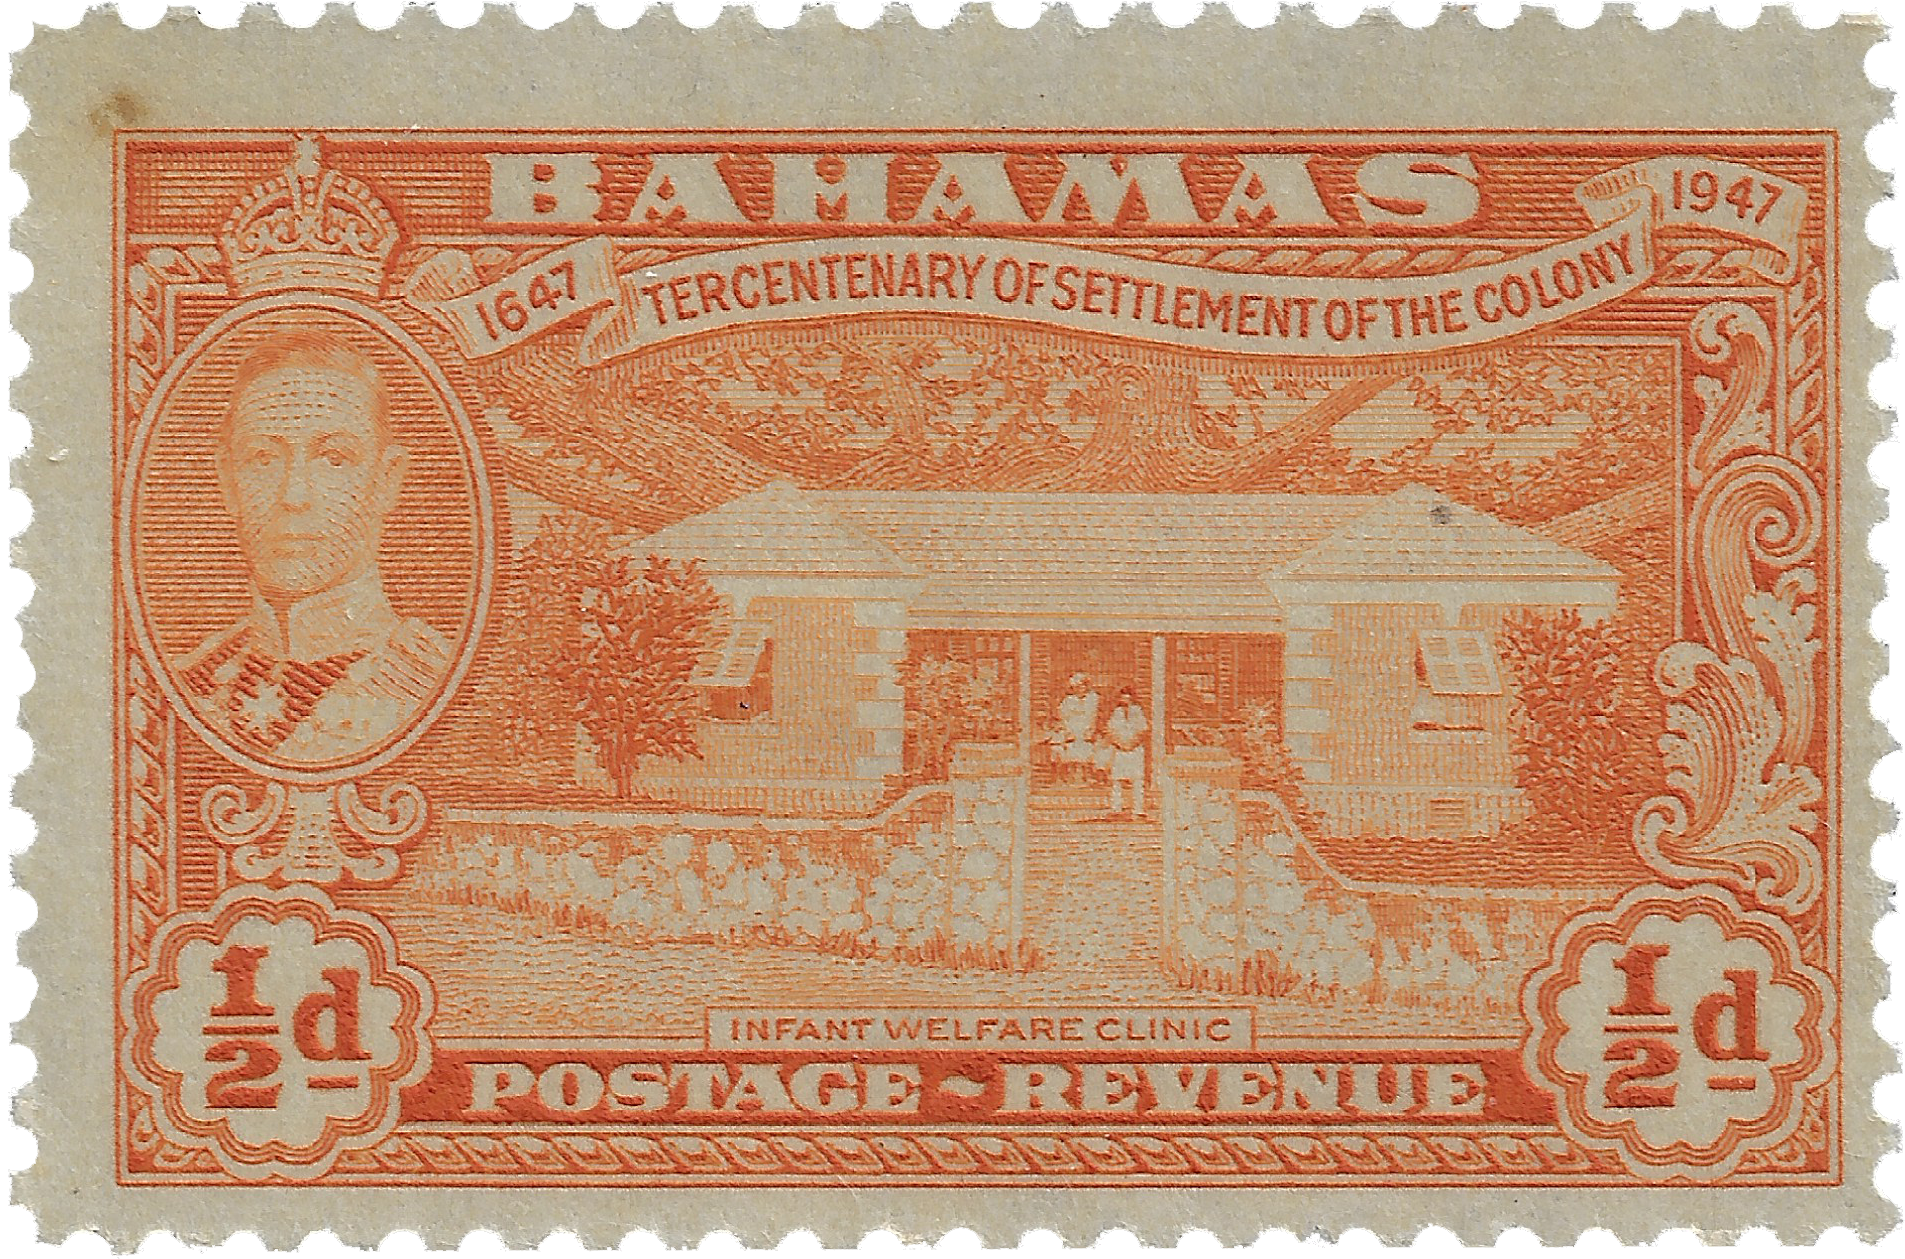 .5d 1948, 1647 Tercentenary of Settlement of the Colony, Infant Welfare Clinic